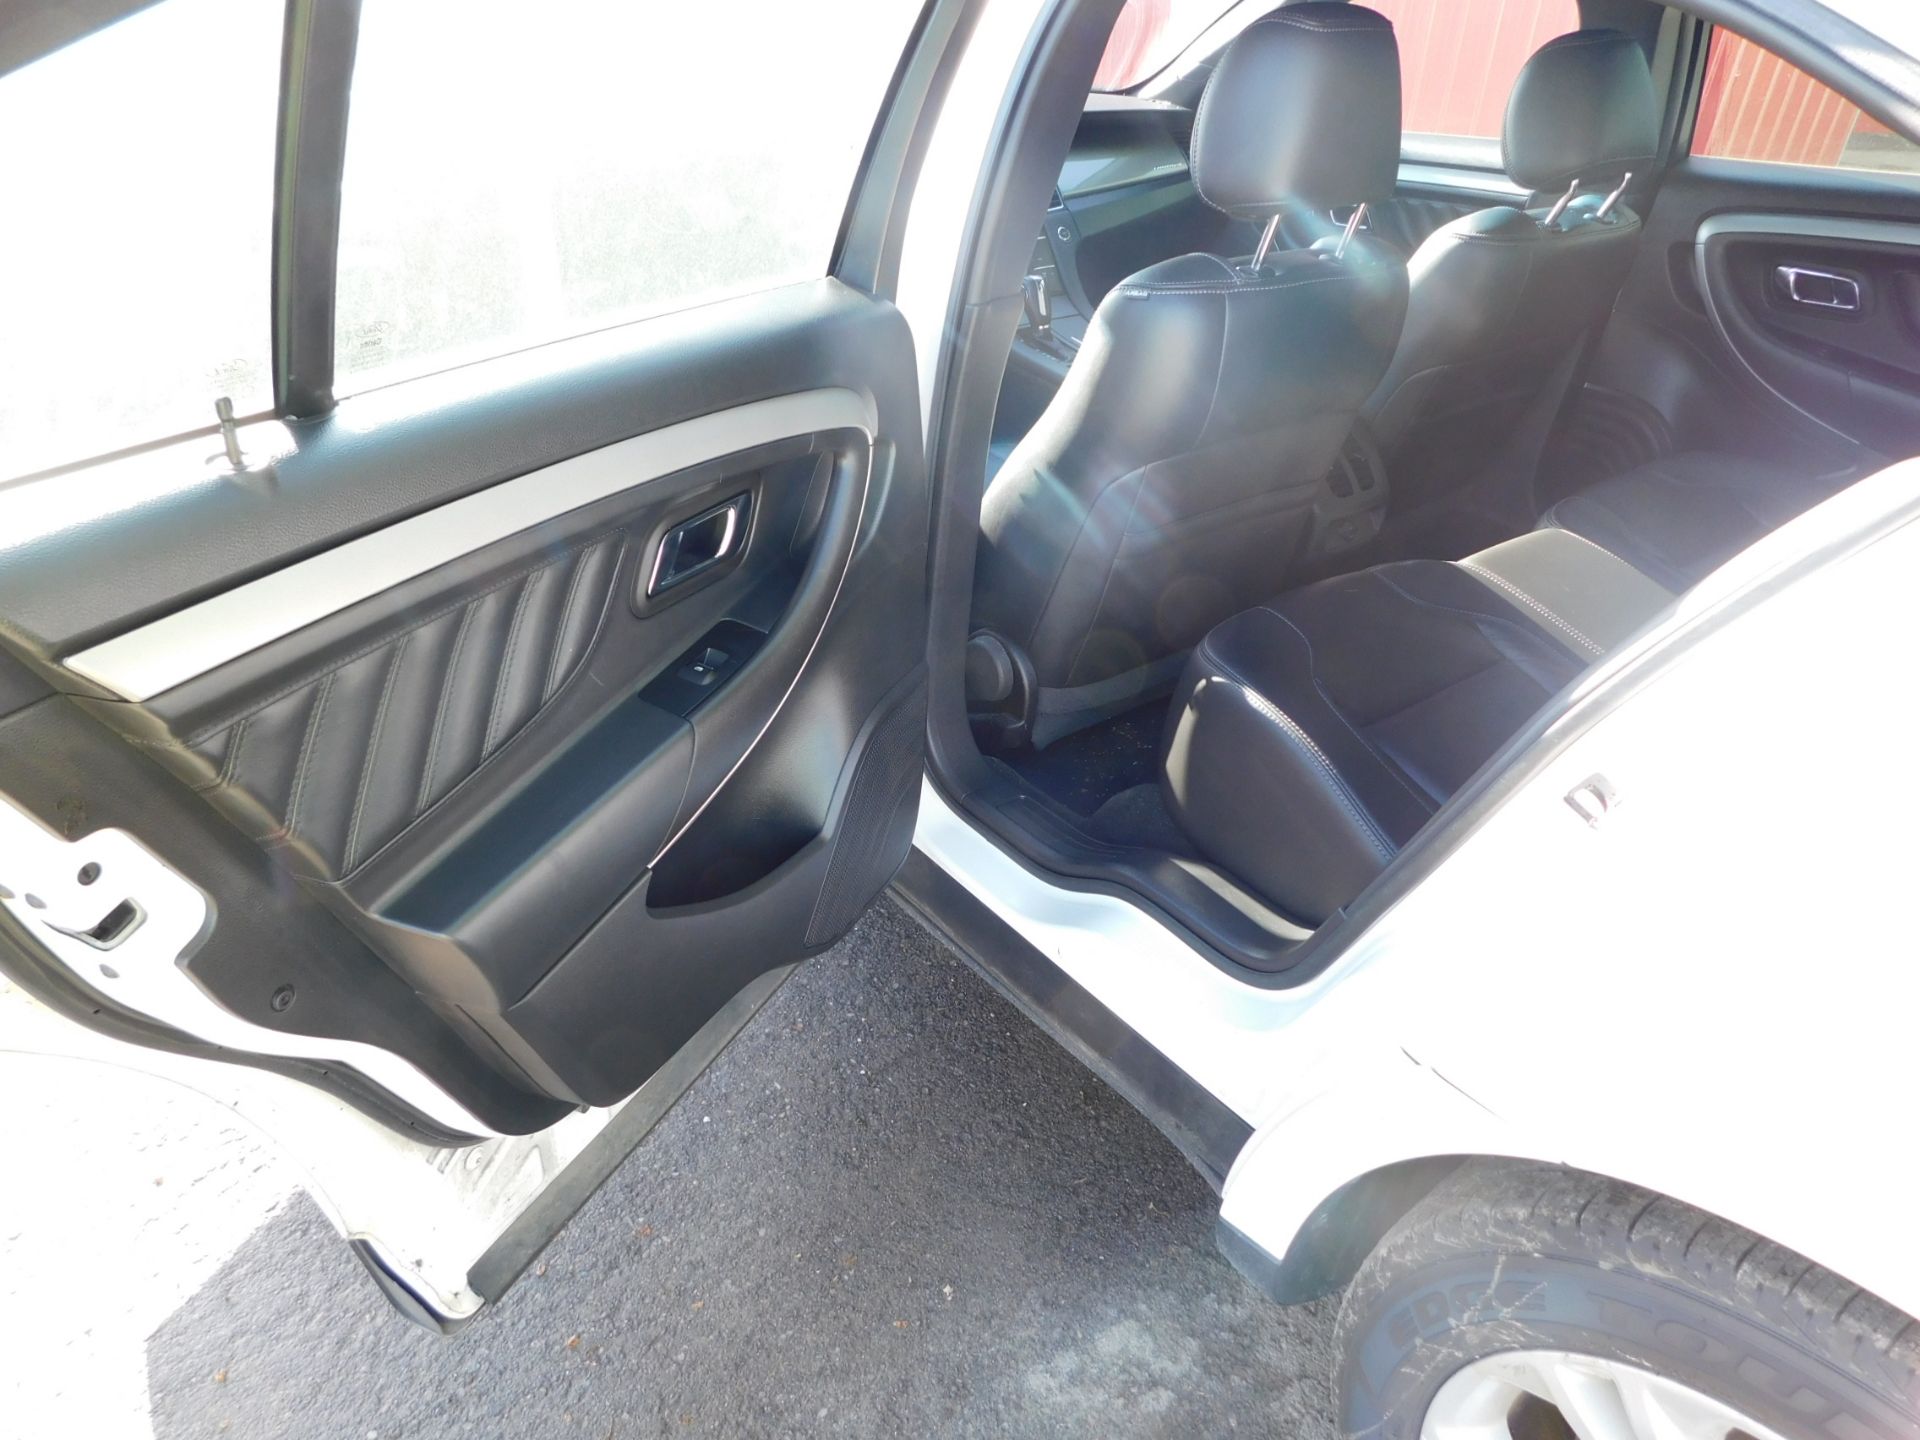 2015 Ford Taurus SEL 4-Door Sedan, vin 1FAHP2E80FG182717, Automatic Transmission, PW,PL,AC,Leather - Image 28 of 42